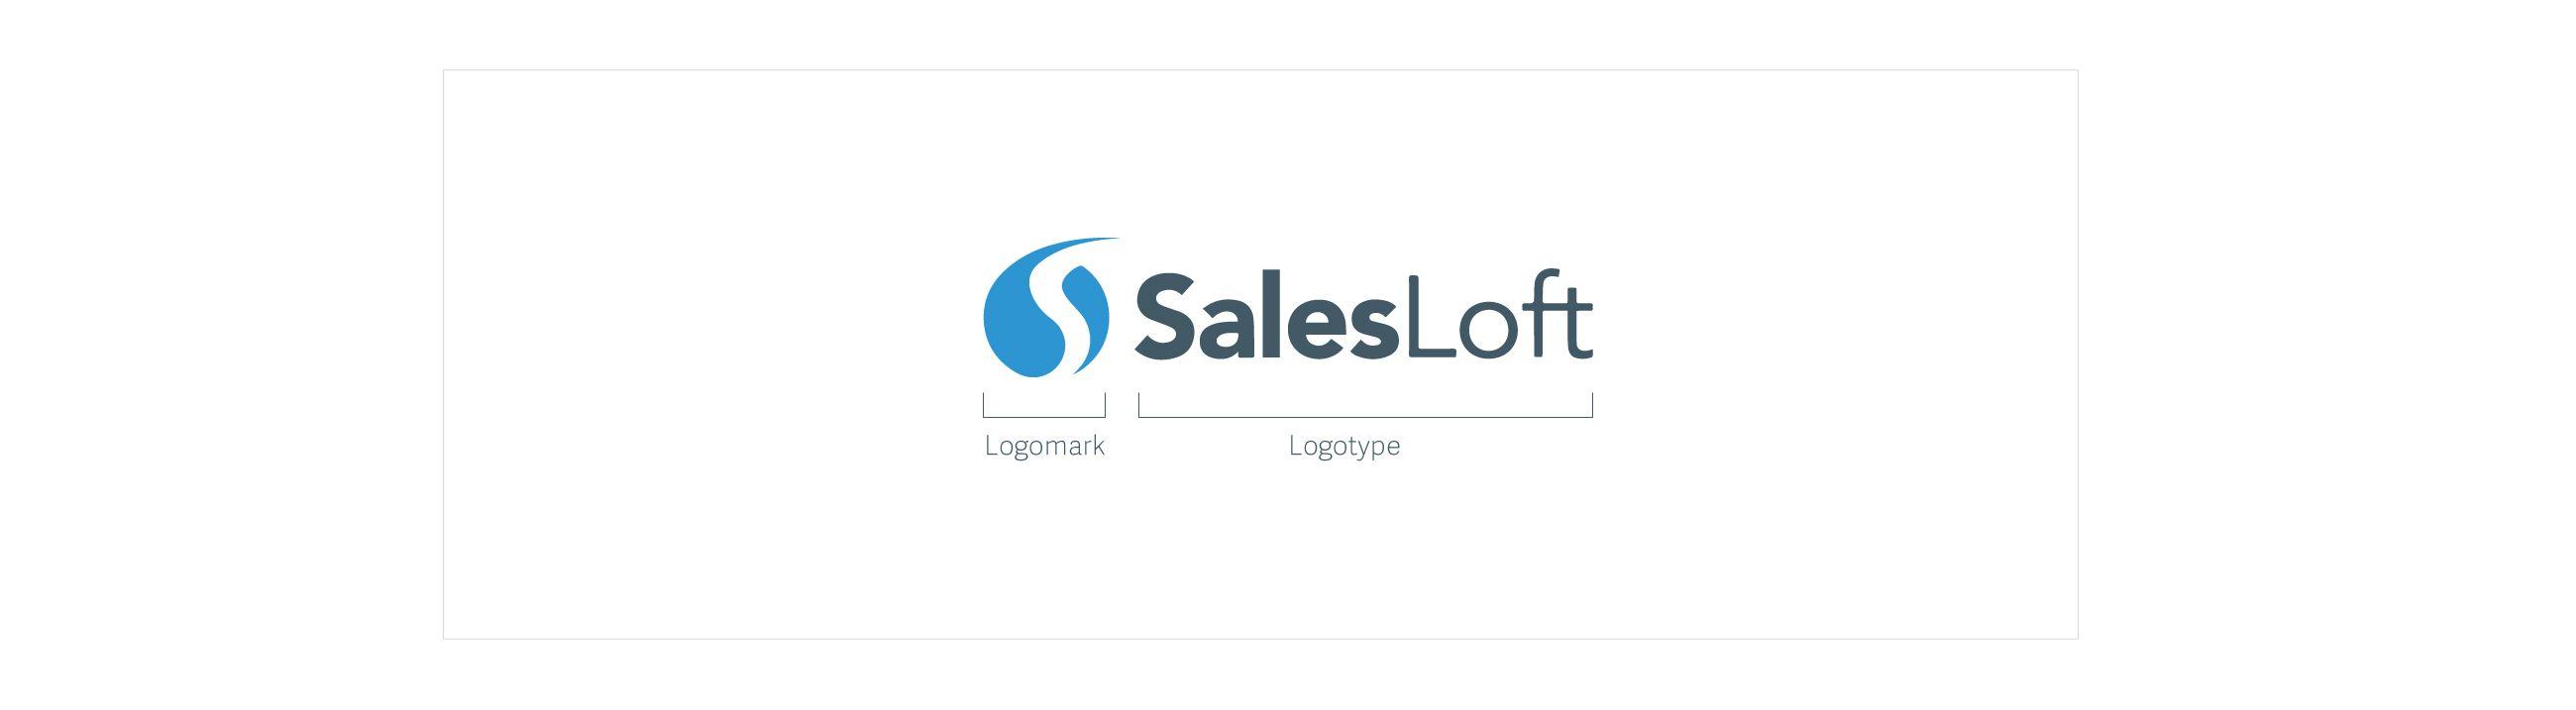 SalesLoft Logo - SalesLoft Brand Guidelines - SalesLoft